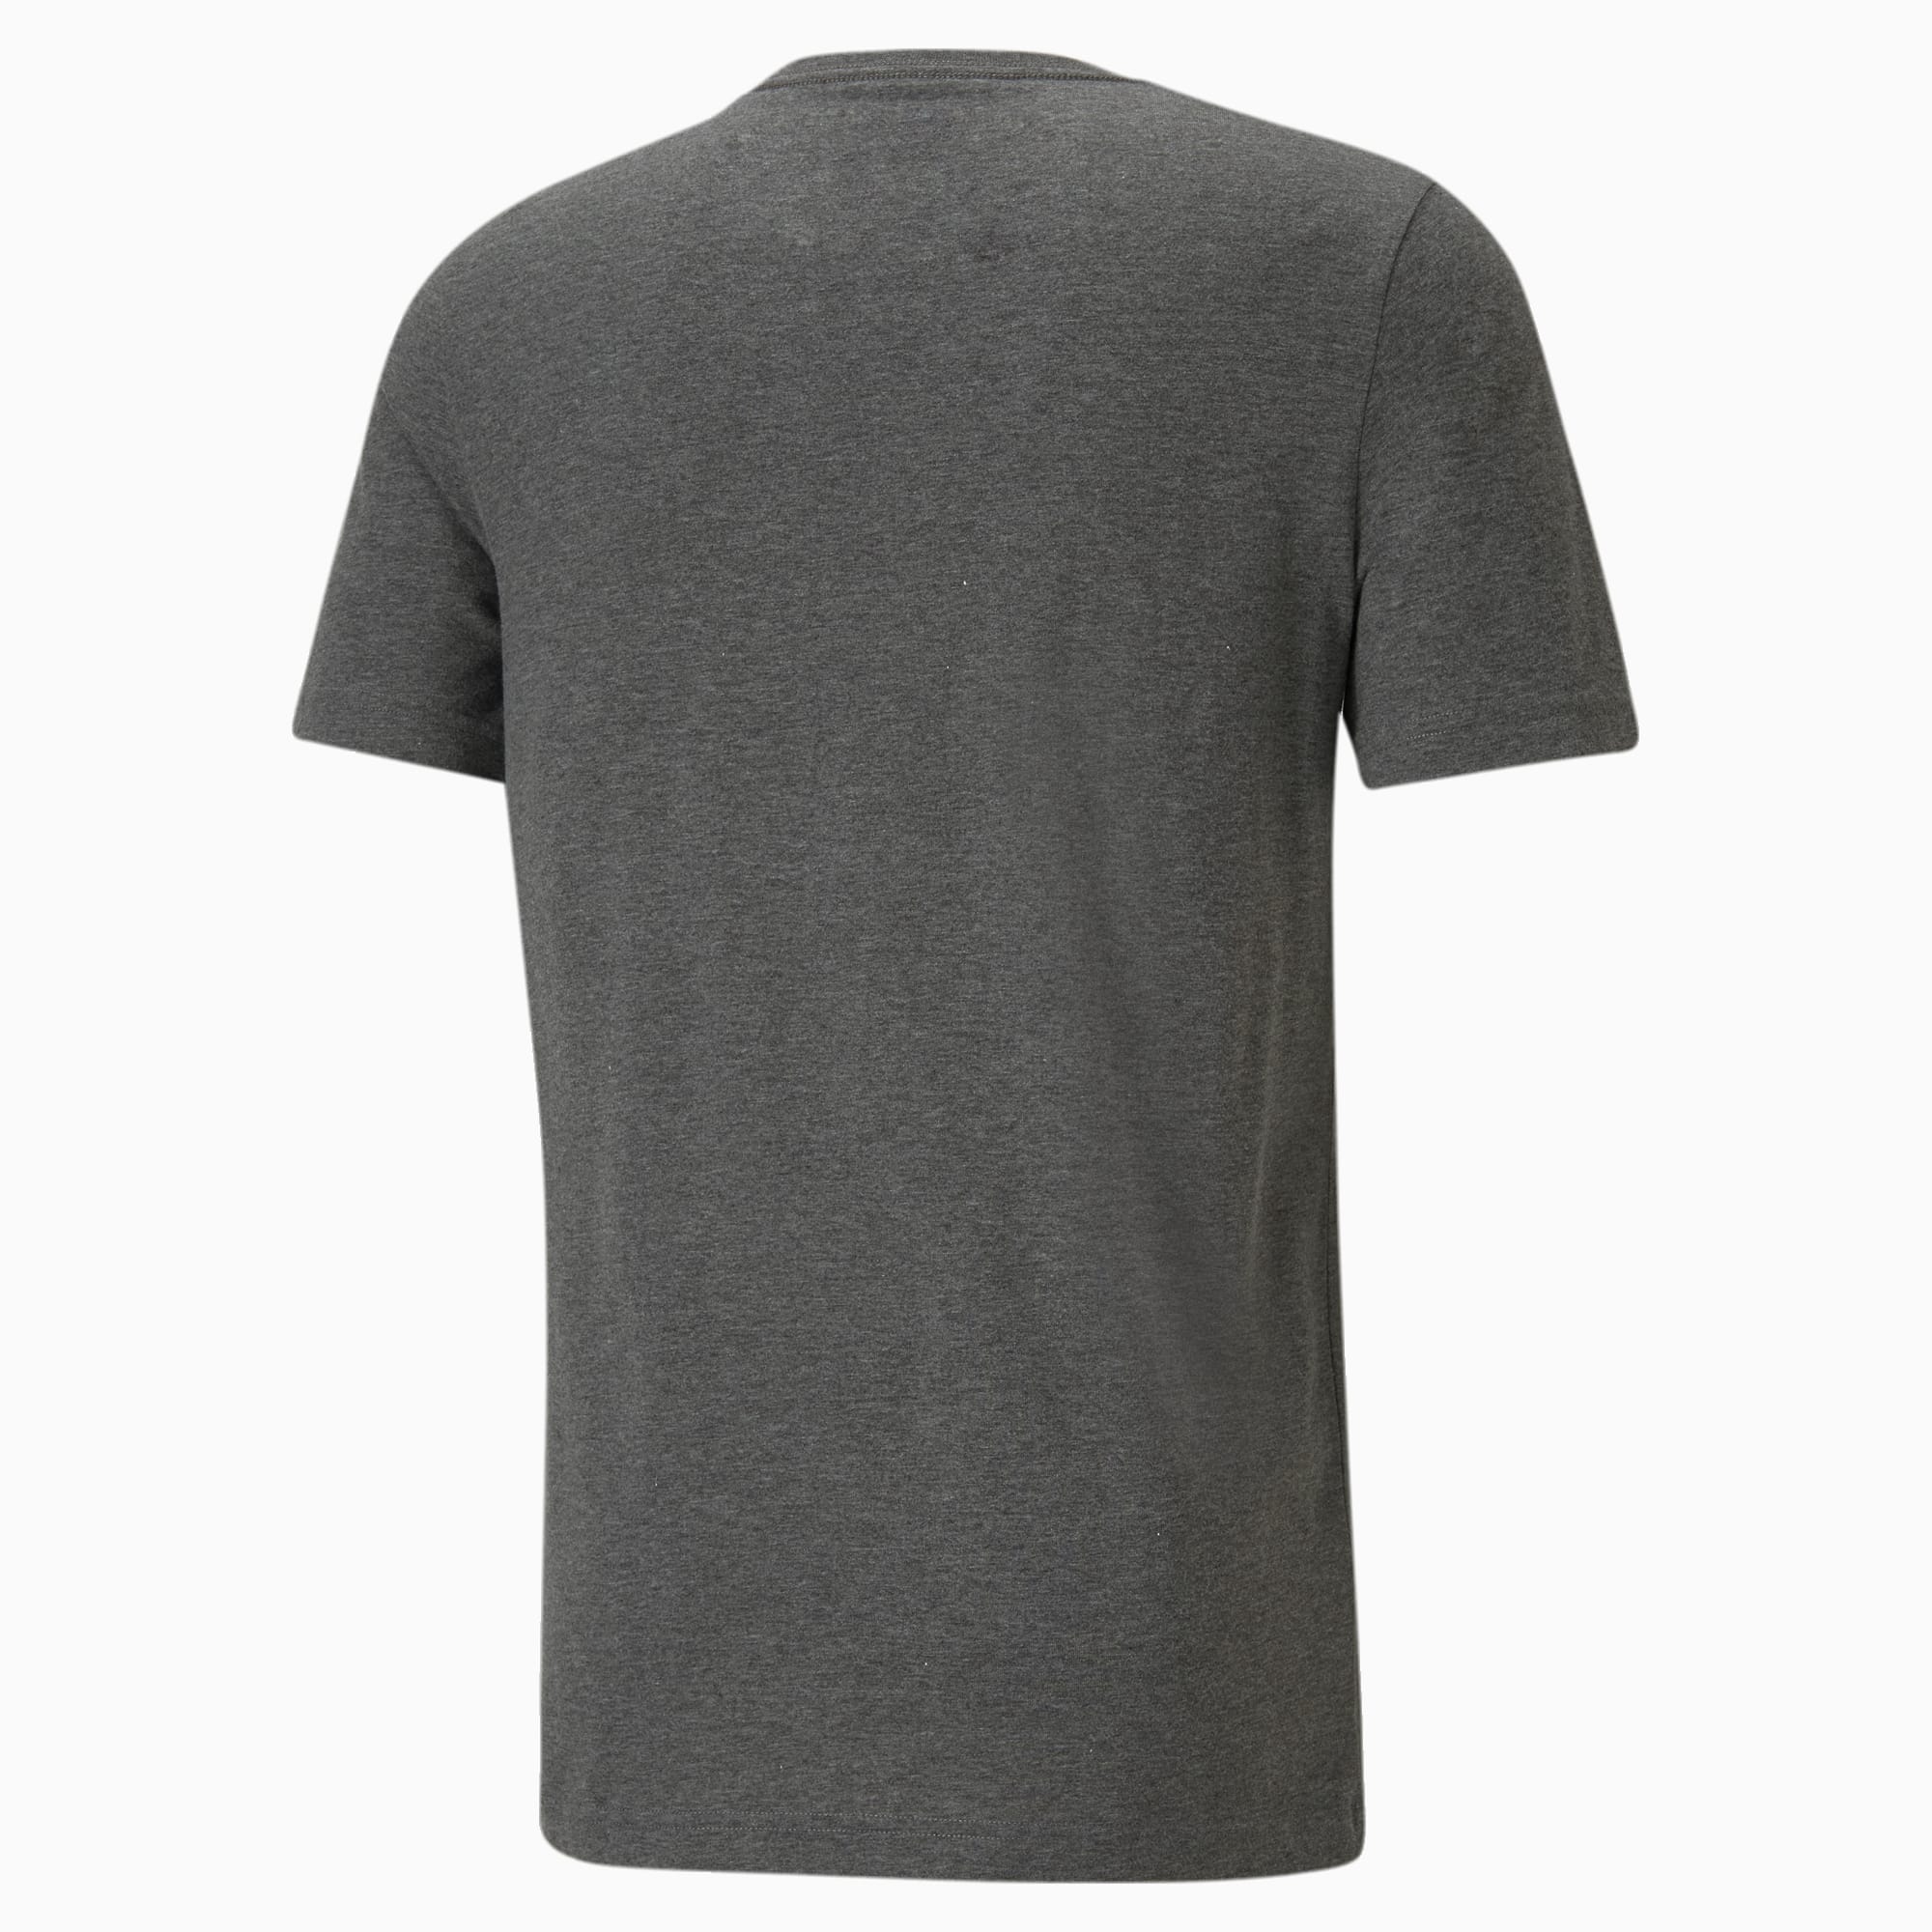 PUMA Essentials Heather Men's T-Shirt, Black, Size XS, Clothing